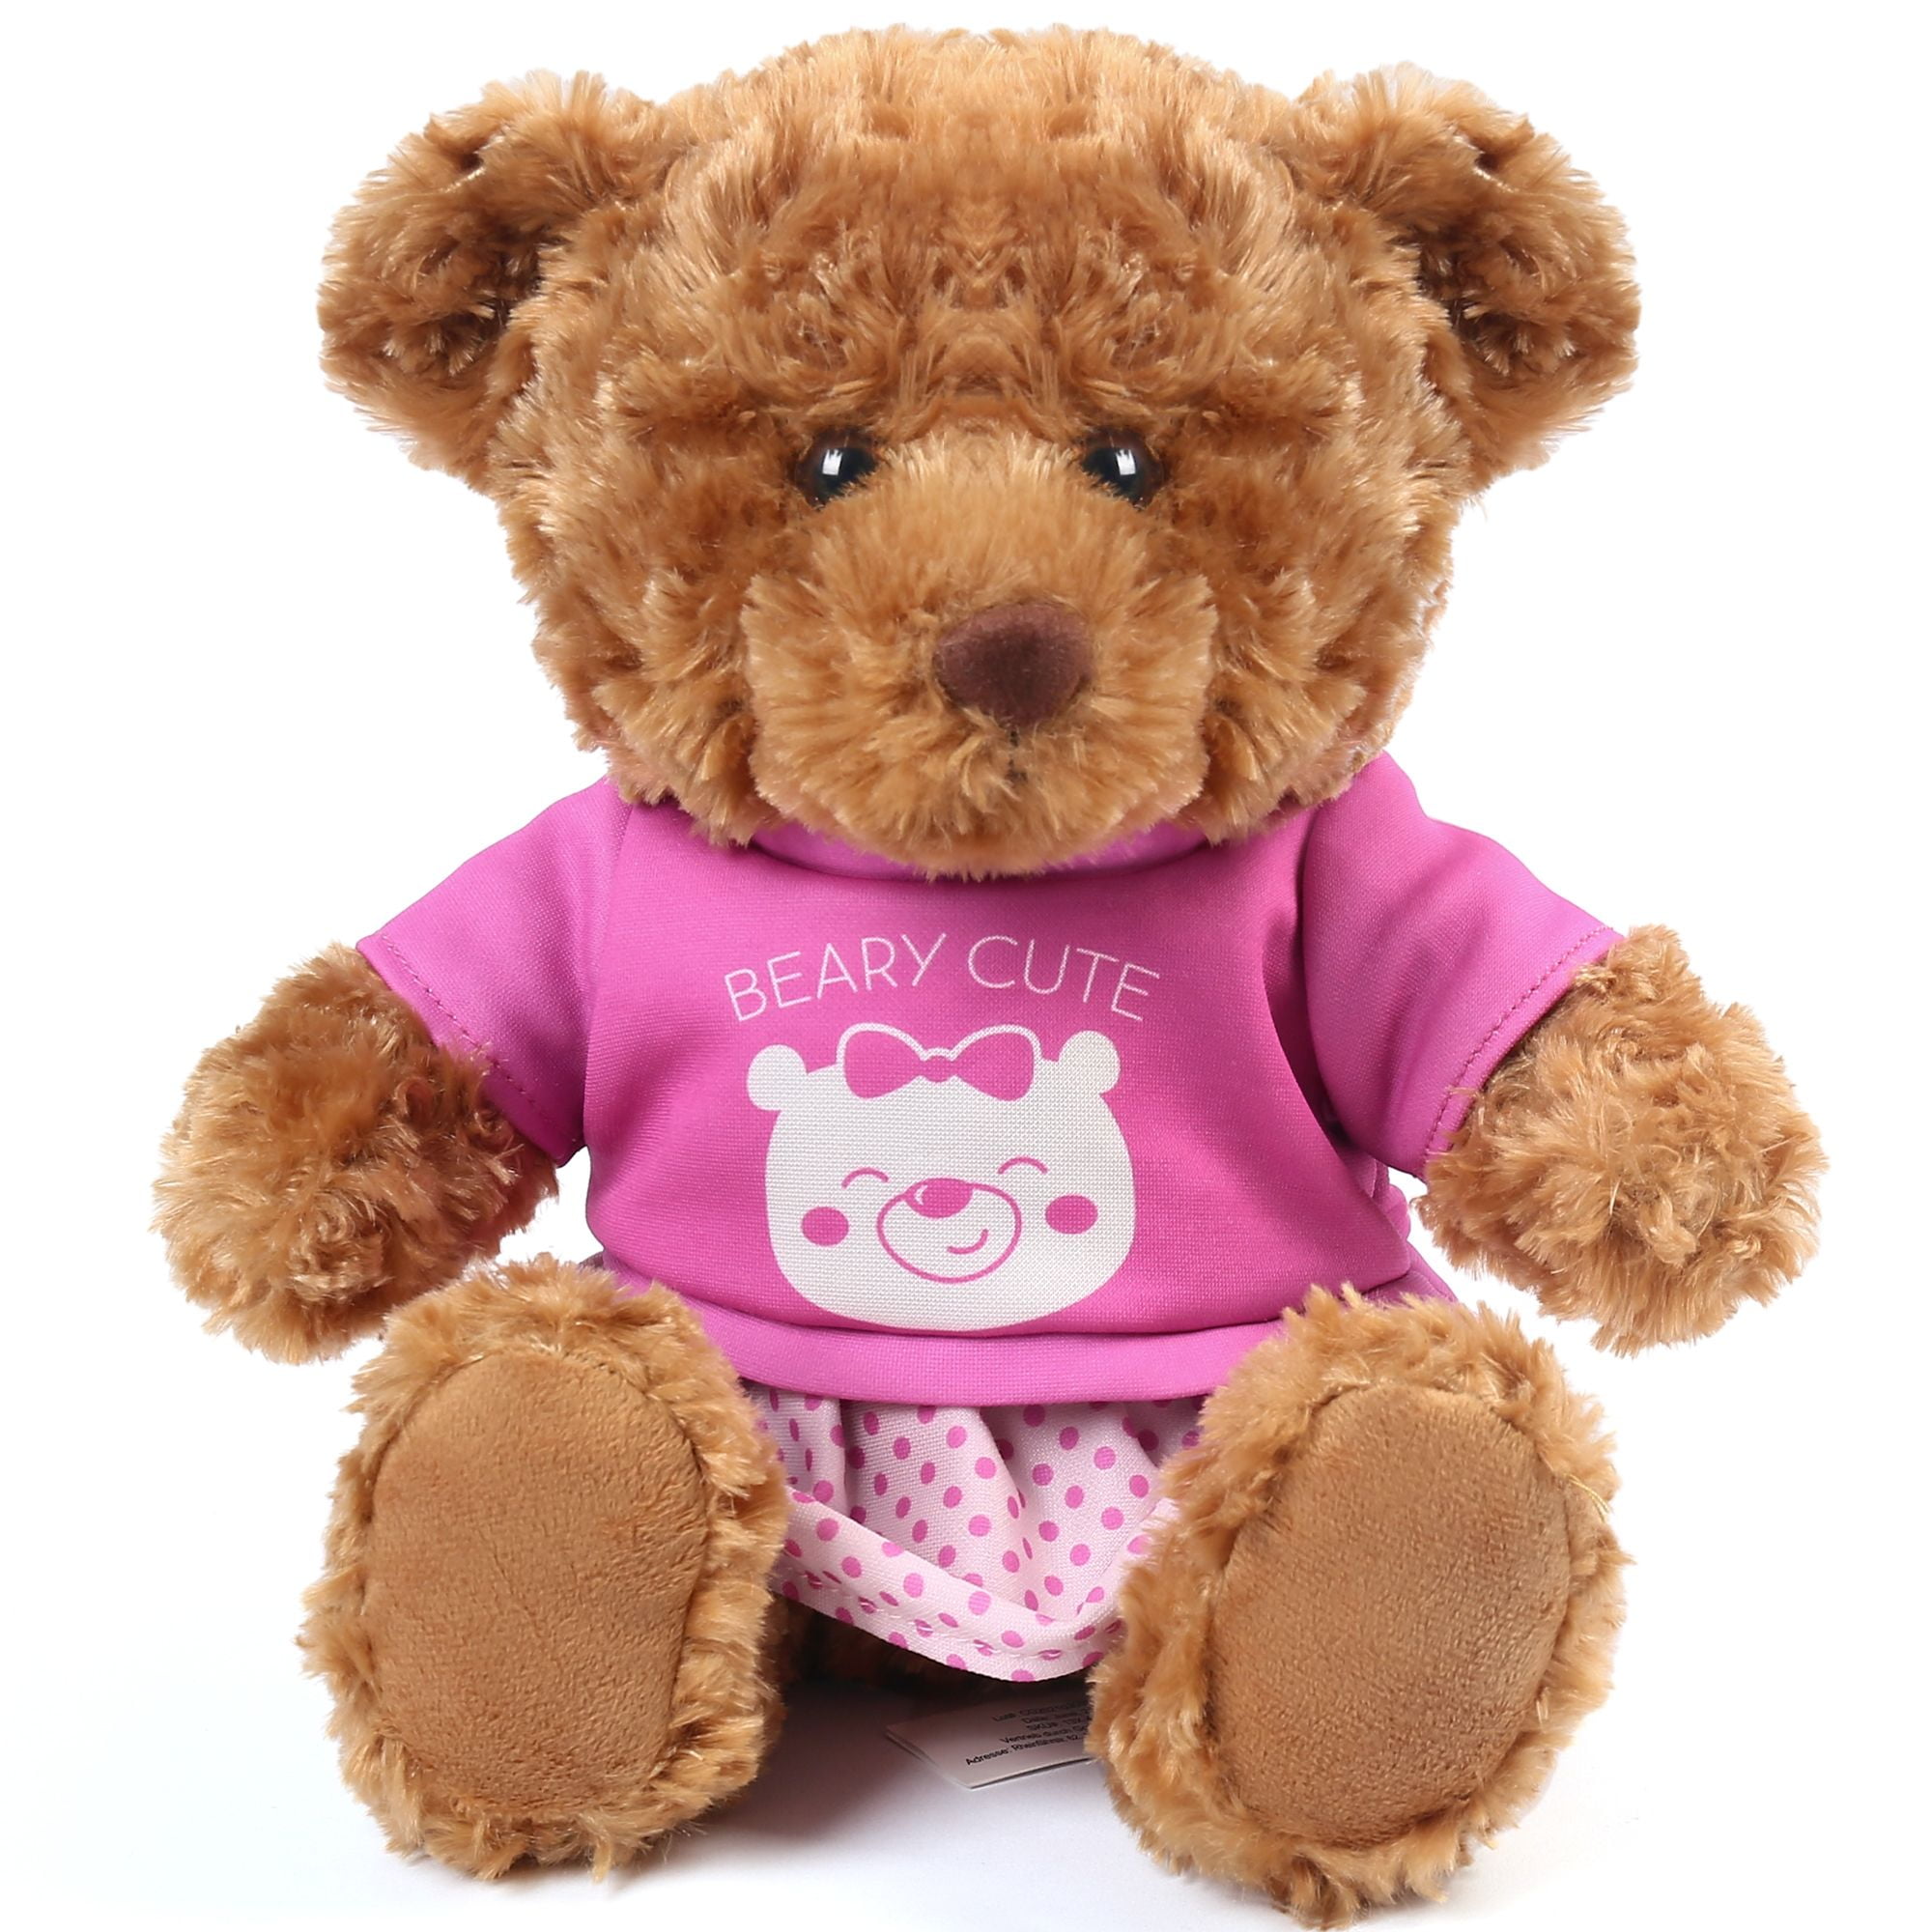 Teddy Bear Soft Toy Doll Animal Safety BROWN Crystal Eyes with METAL BACKS 